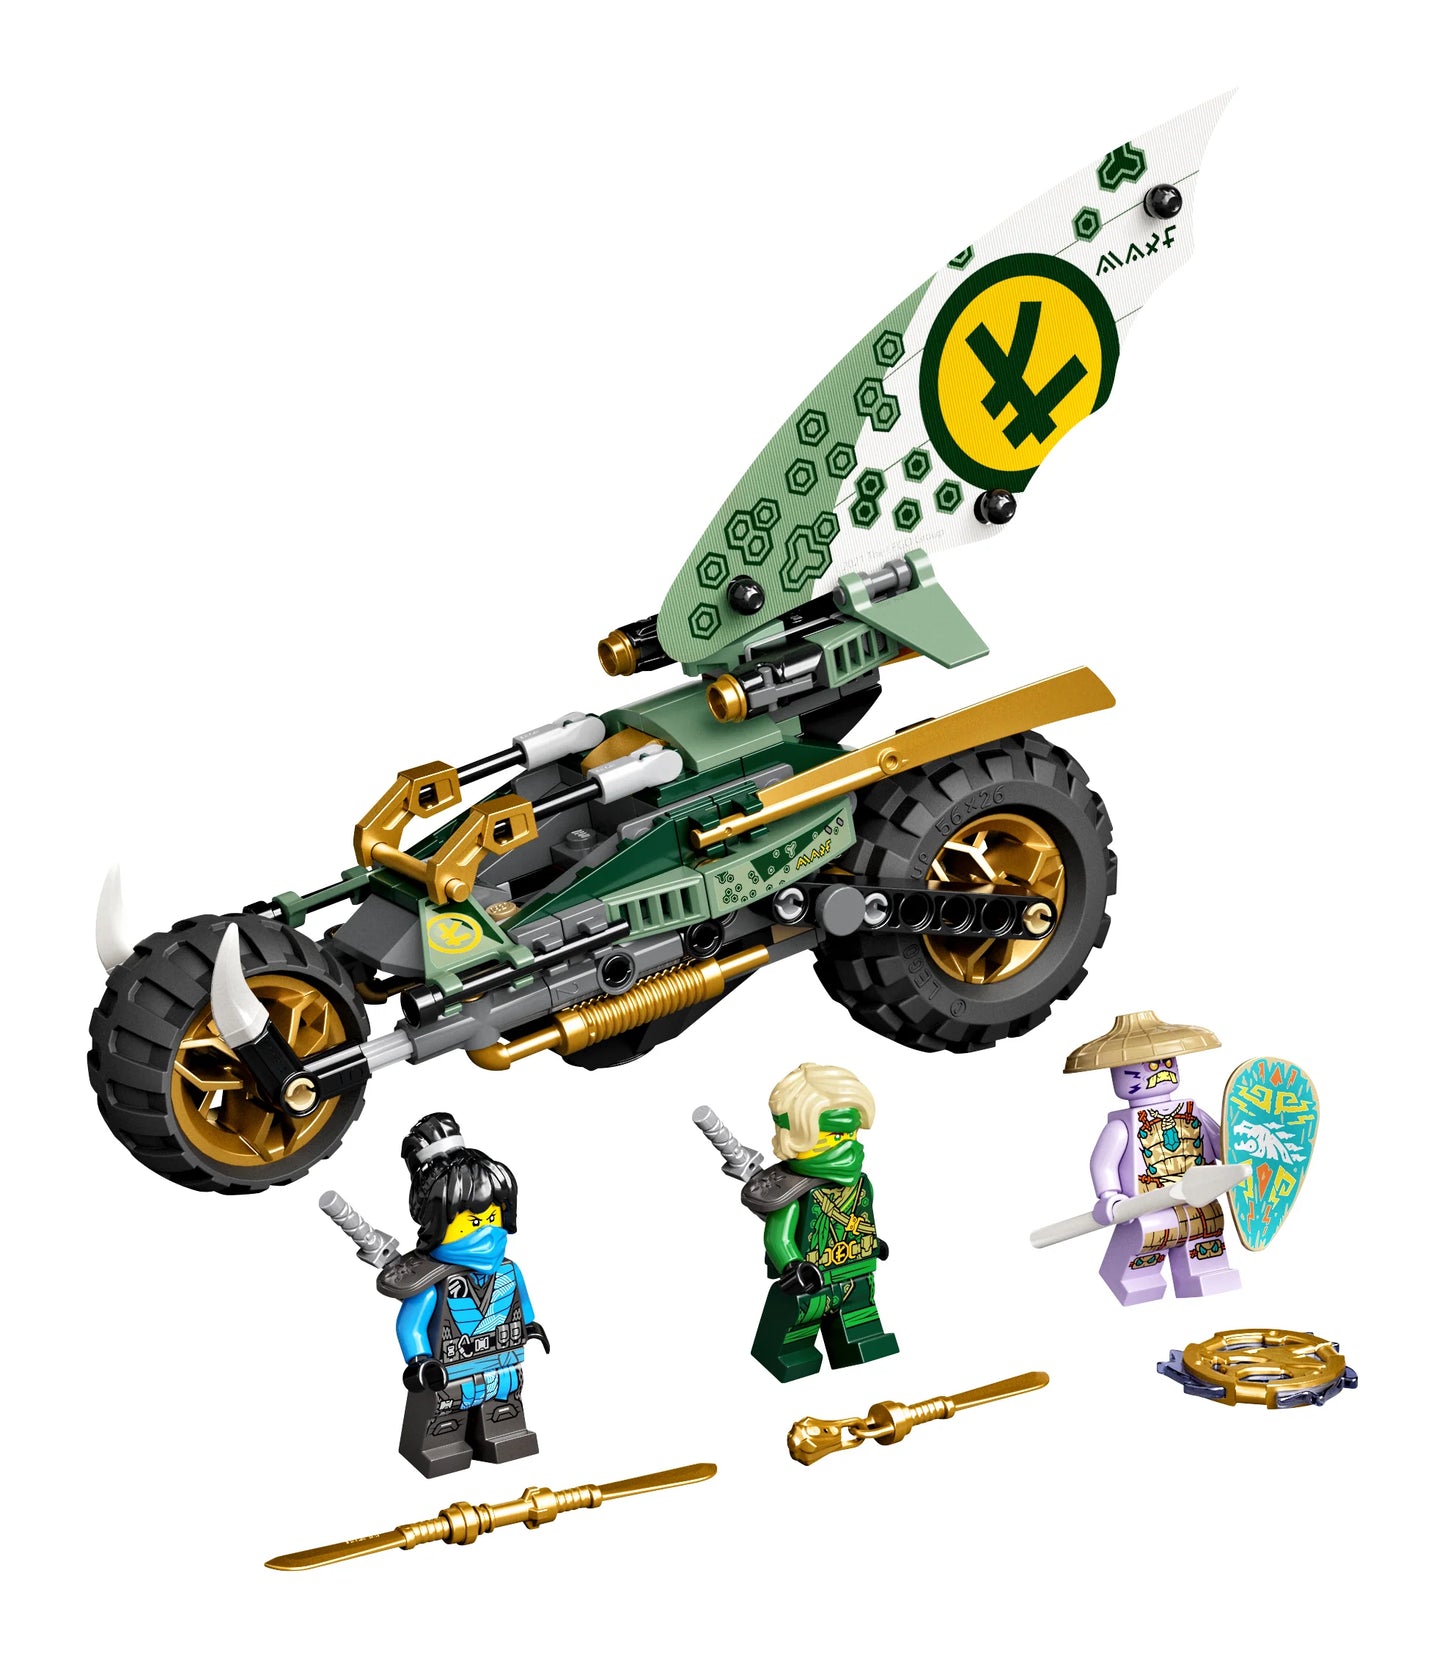 Lloyd's Junglechopper-LEGO Ninjago